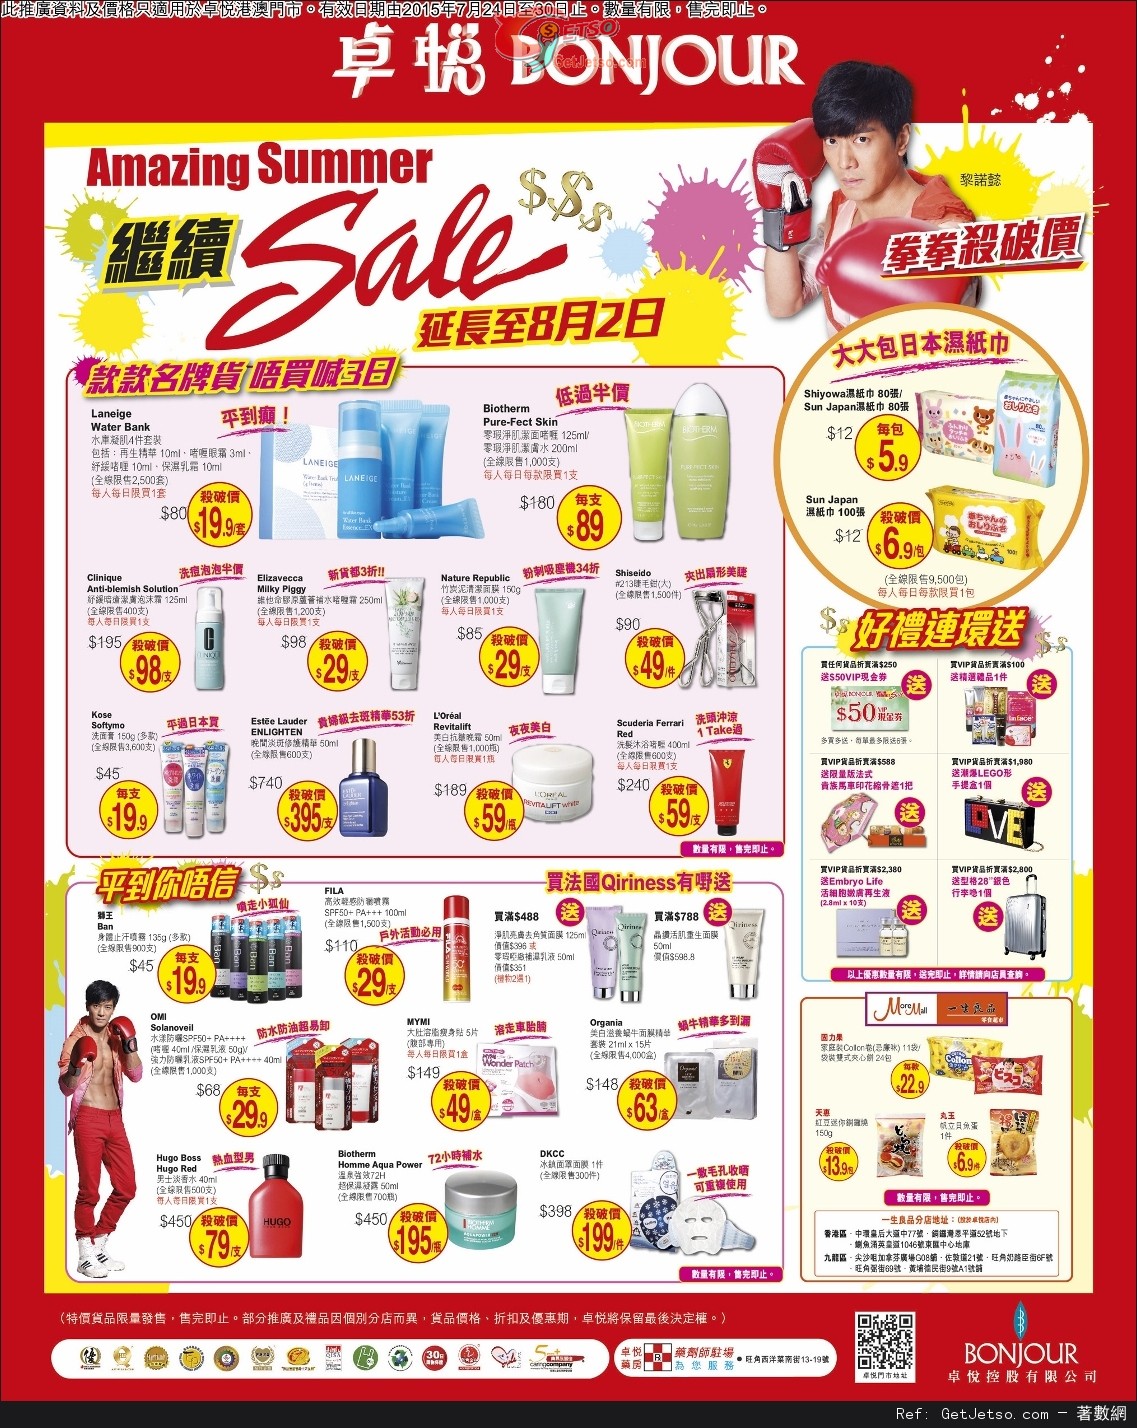 卓悅Amazing Summer Sale 購物優惠(至15年7月30日)圖片1